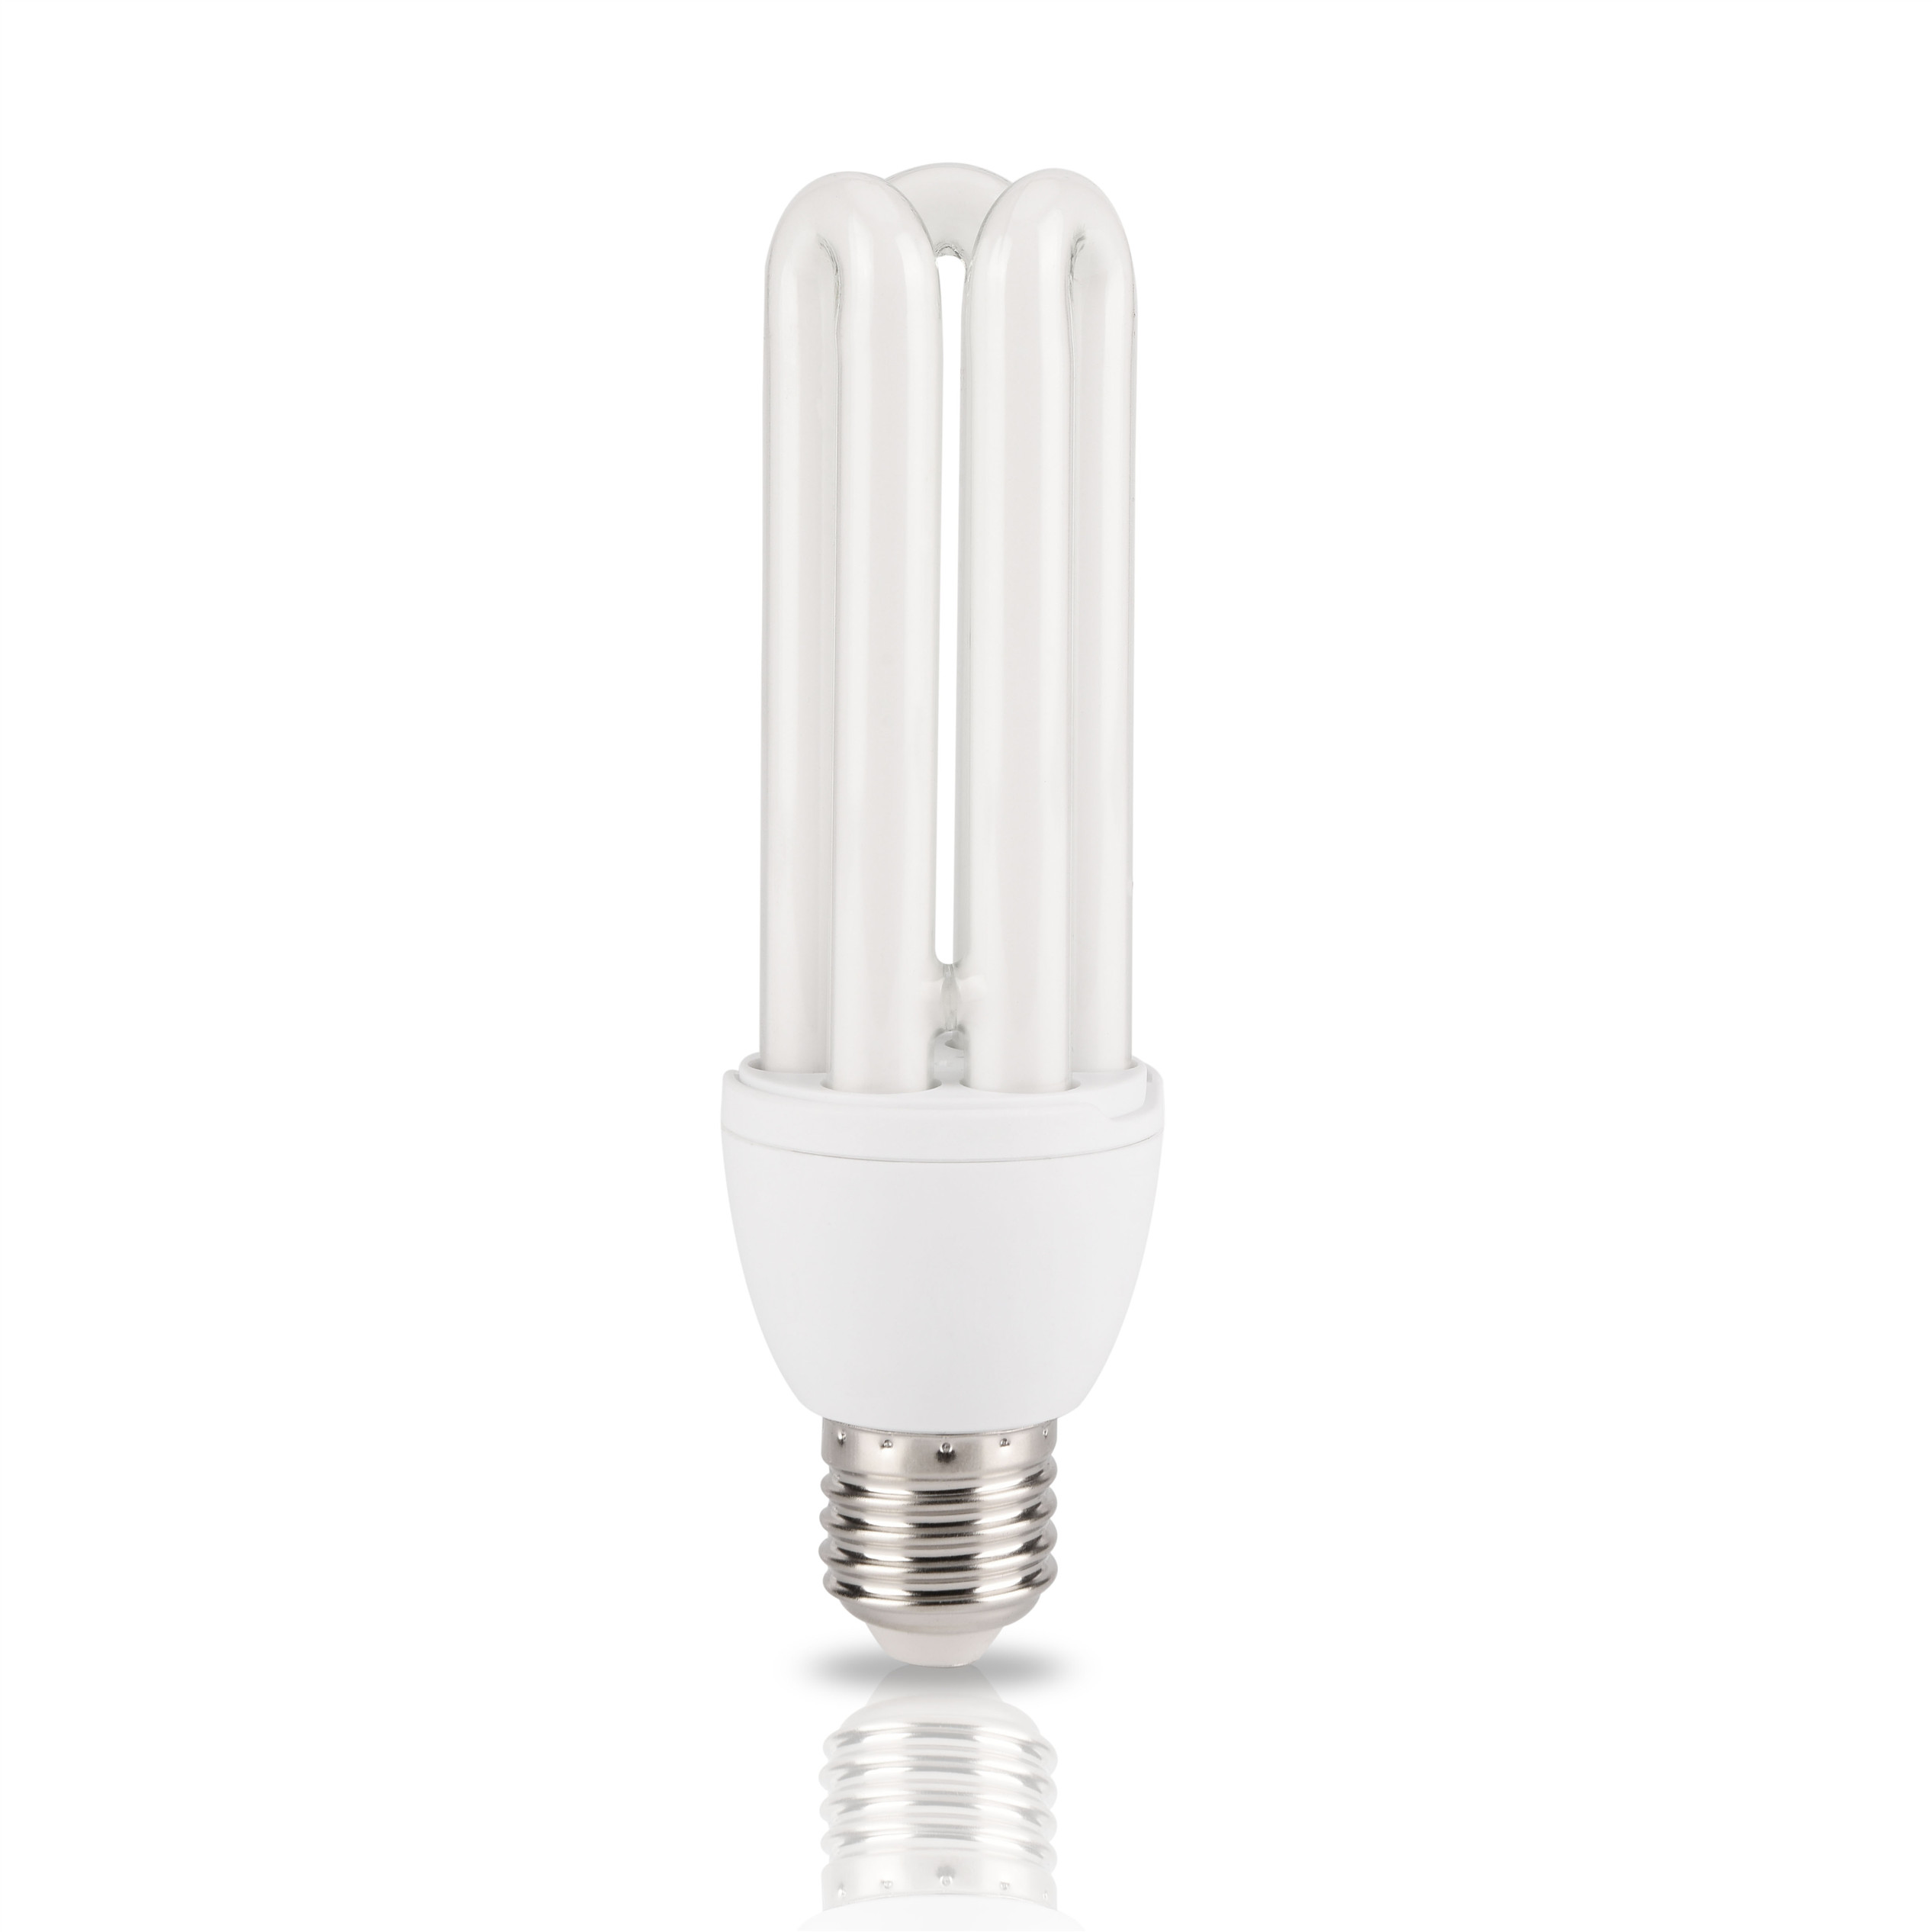 4U 50W CFL bulb energy saving lamps